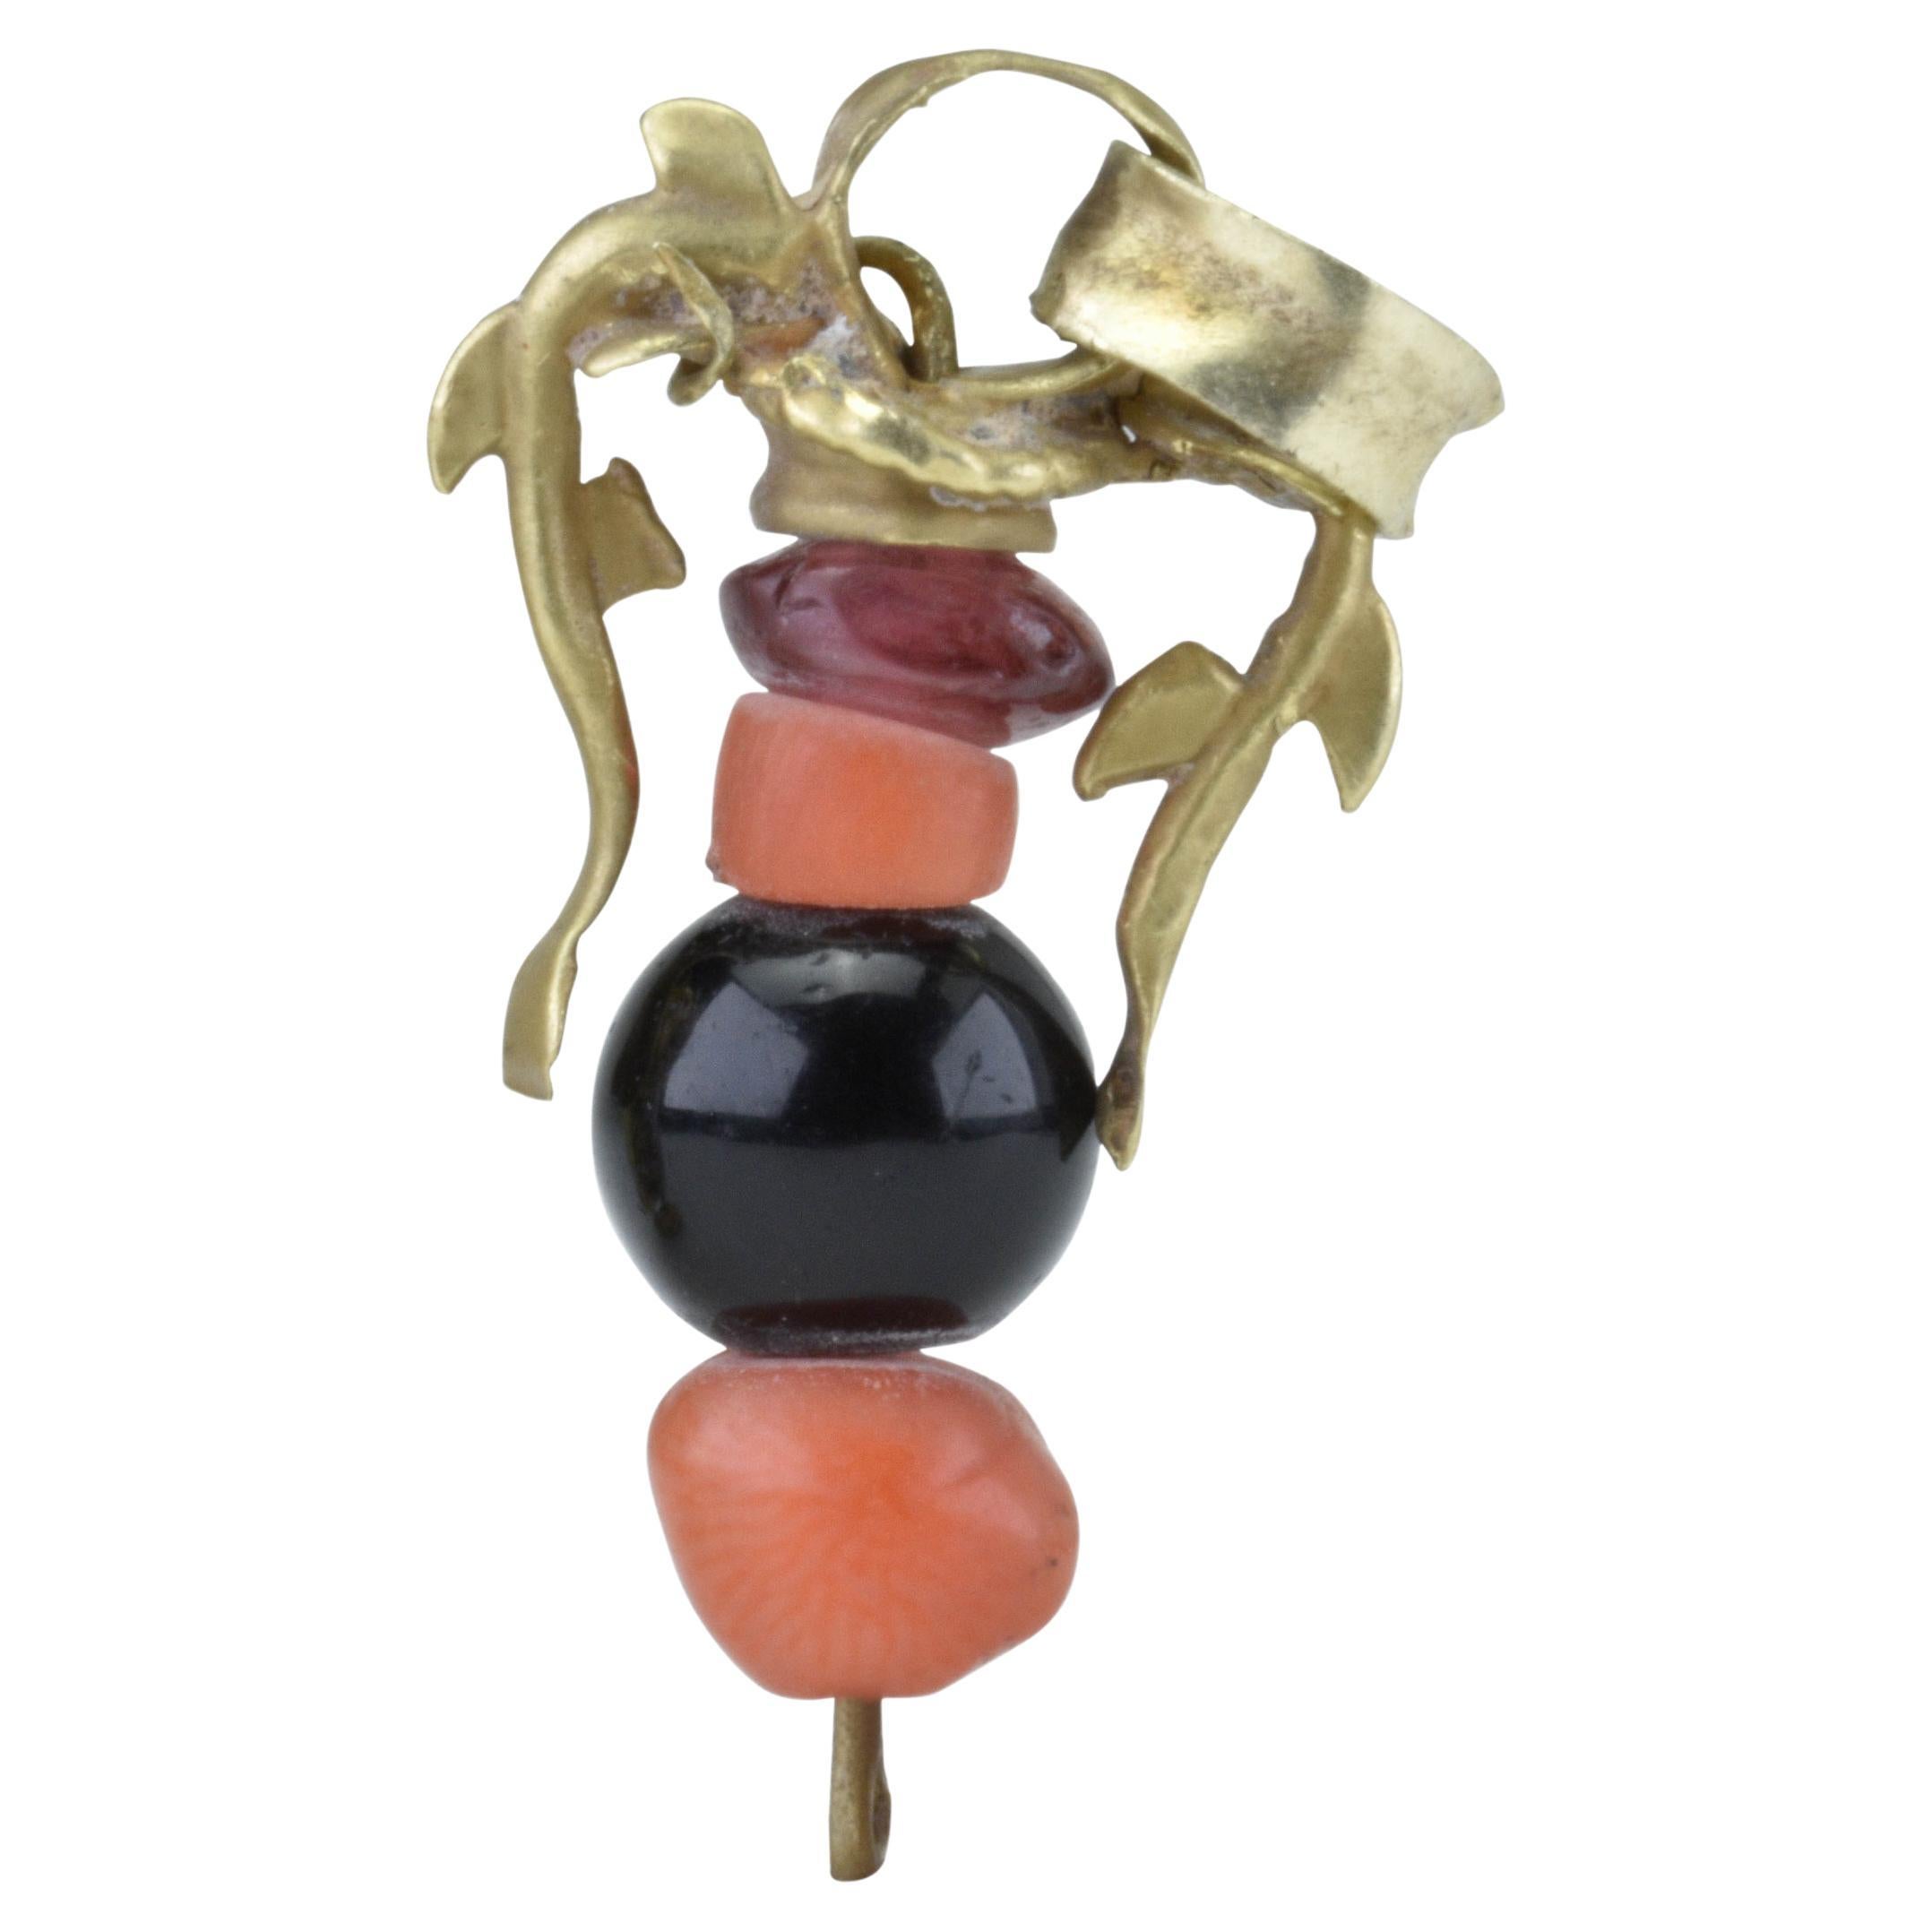 Details about   1x Vintage Nostalgic Greek Psilikoko Necklace Kid Pacifier Ornament Gem Toy Rare 